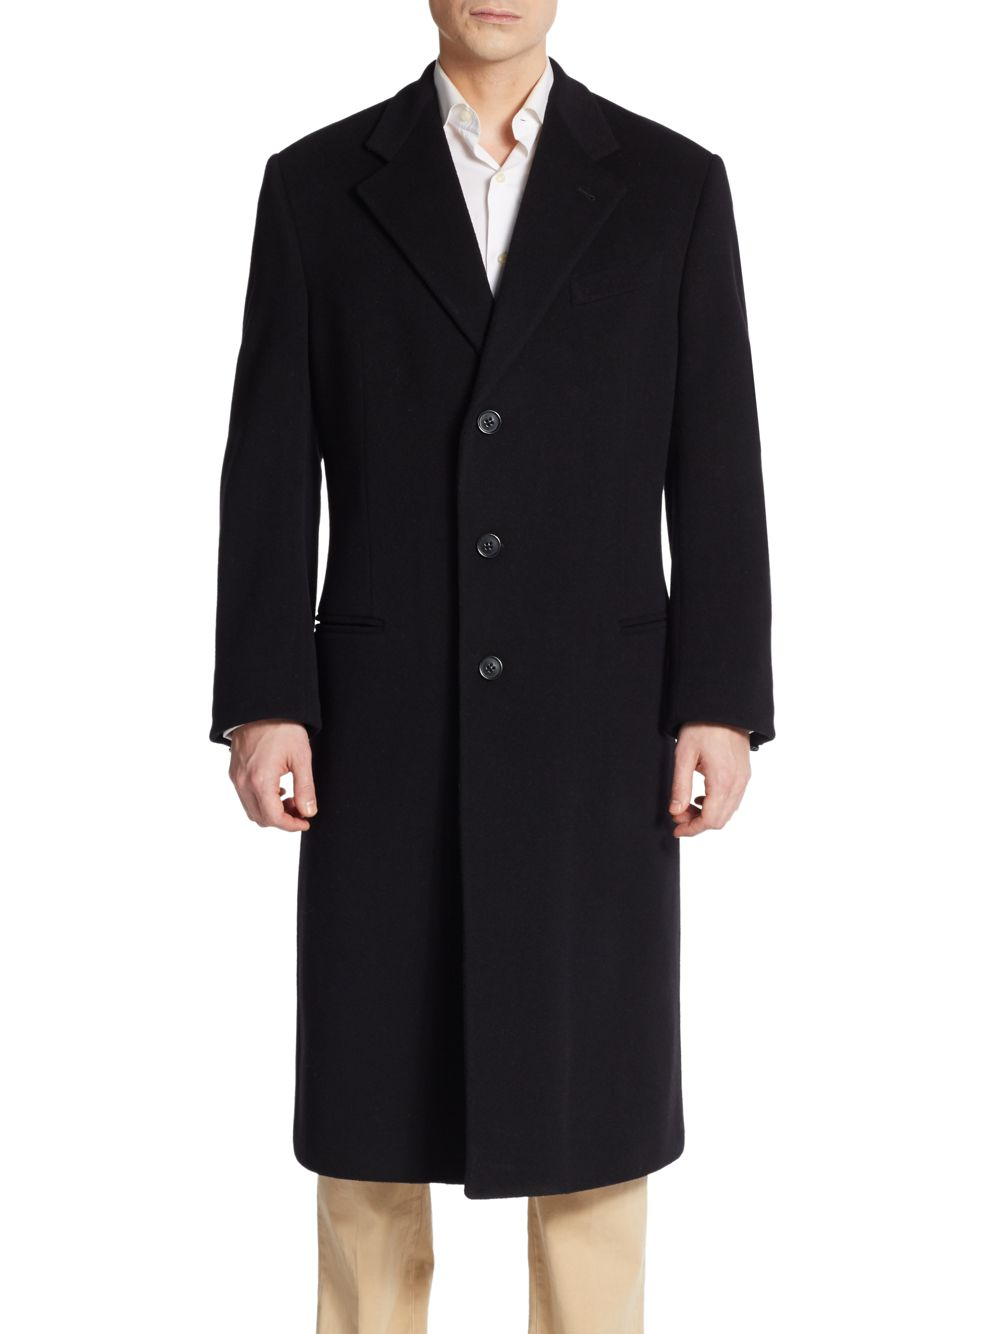 Armani Wool-blend Executive Coat in Black for Men - Lyst